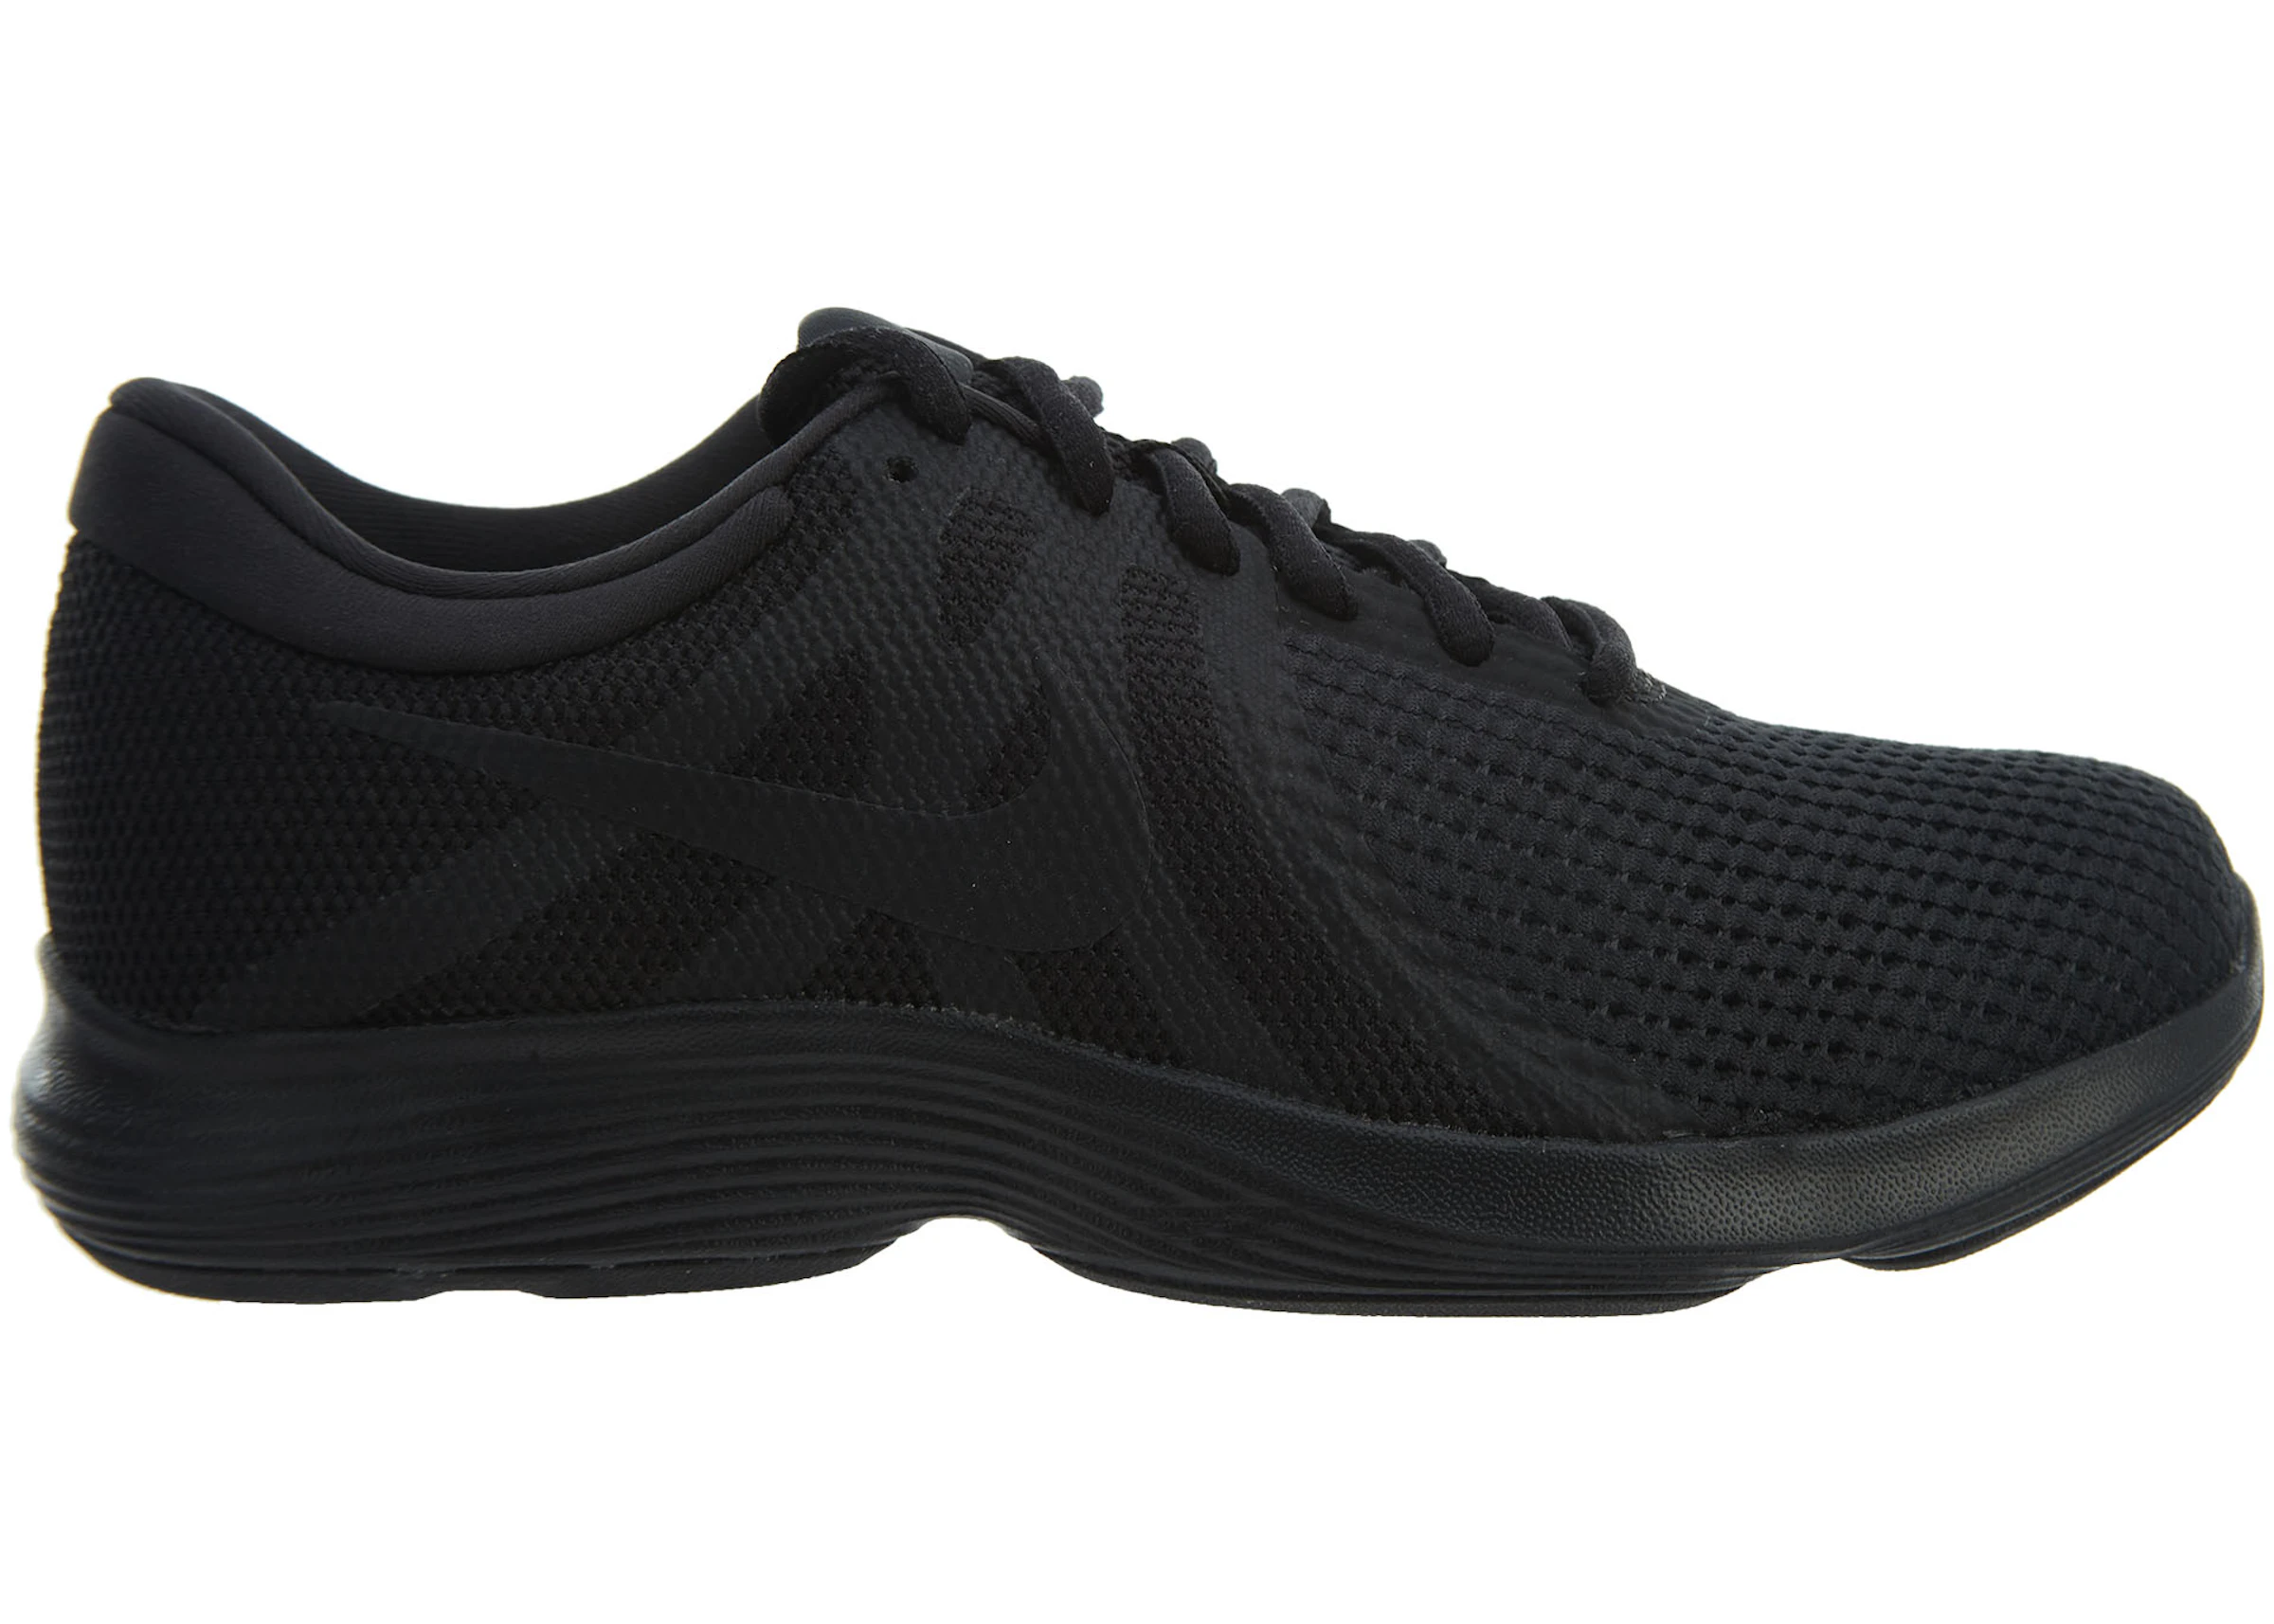 Accor lanzamiento bufanda Nike Revolution 4 Black Black-Anthracite-White - AA7402-002 4E - ES